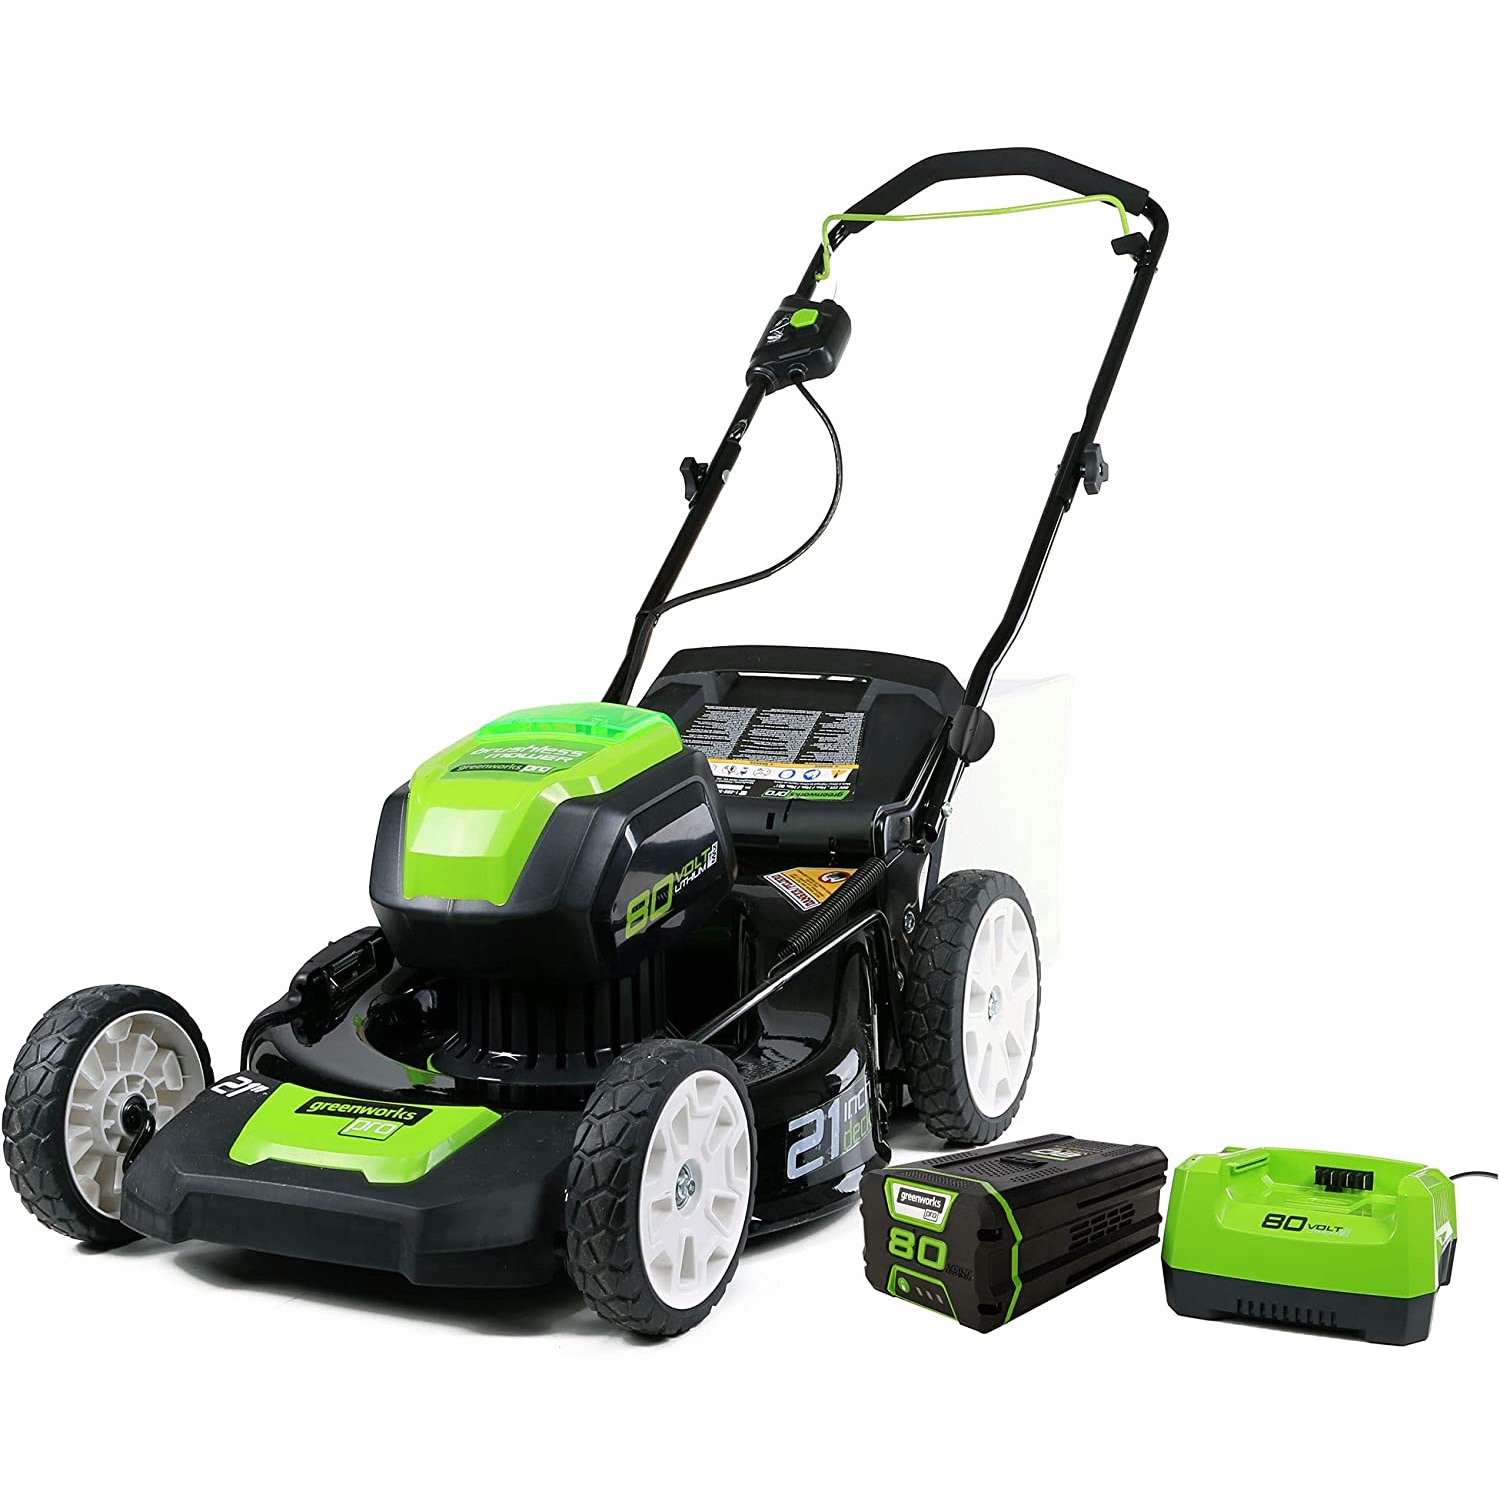 Greenworks Pro 80V 21-Inch Brushless Lawn Mower